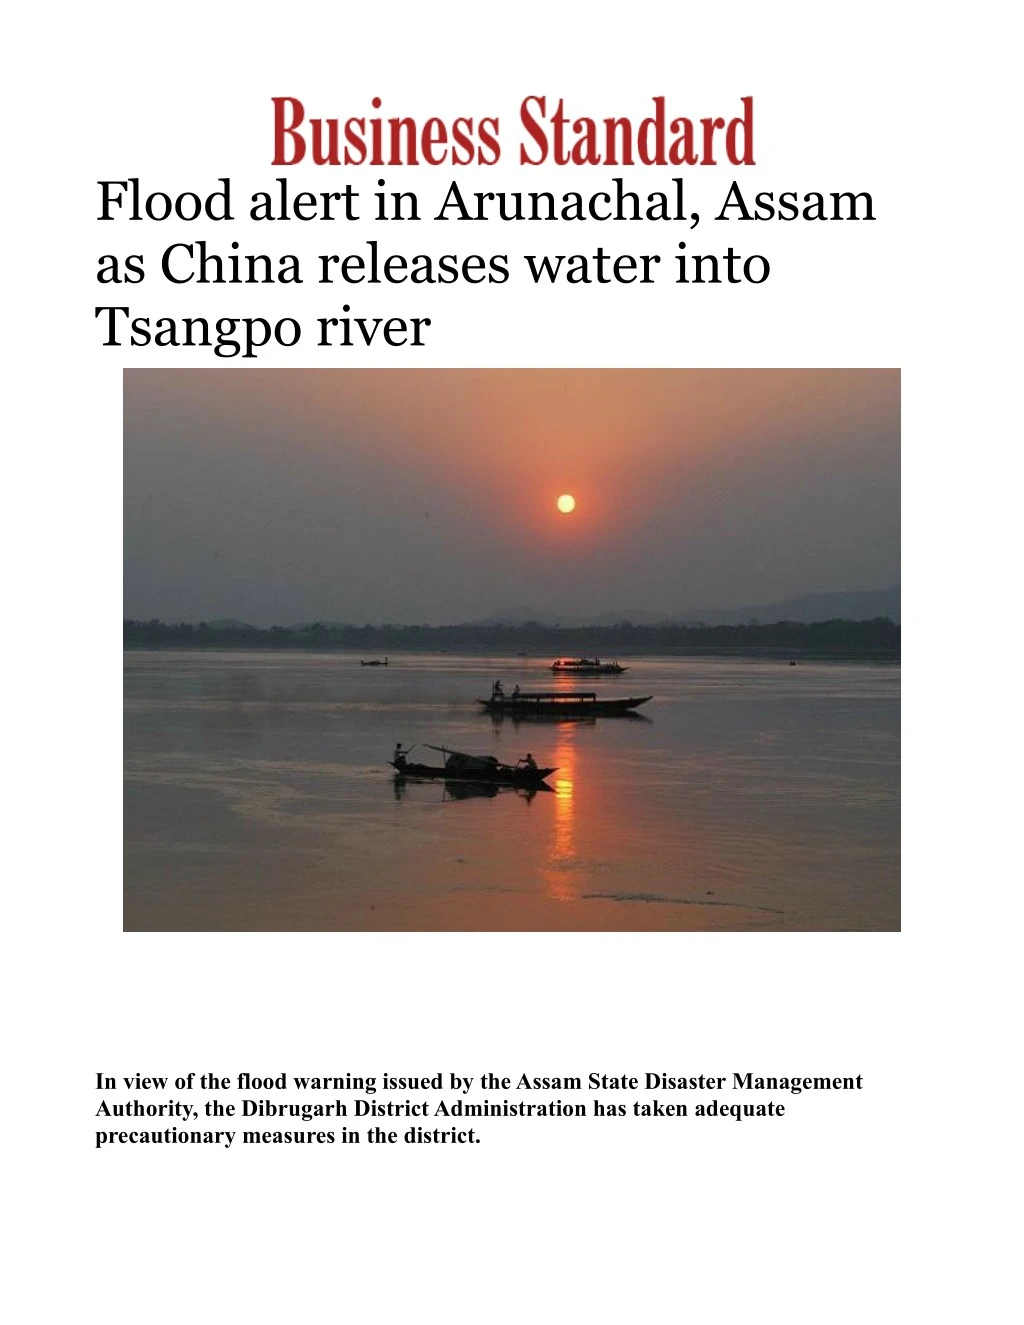 flood alert in arunachal assam as china releases